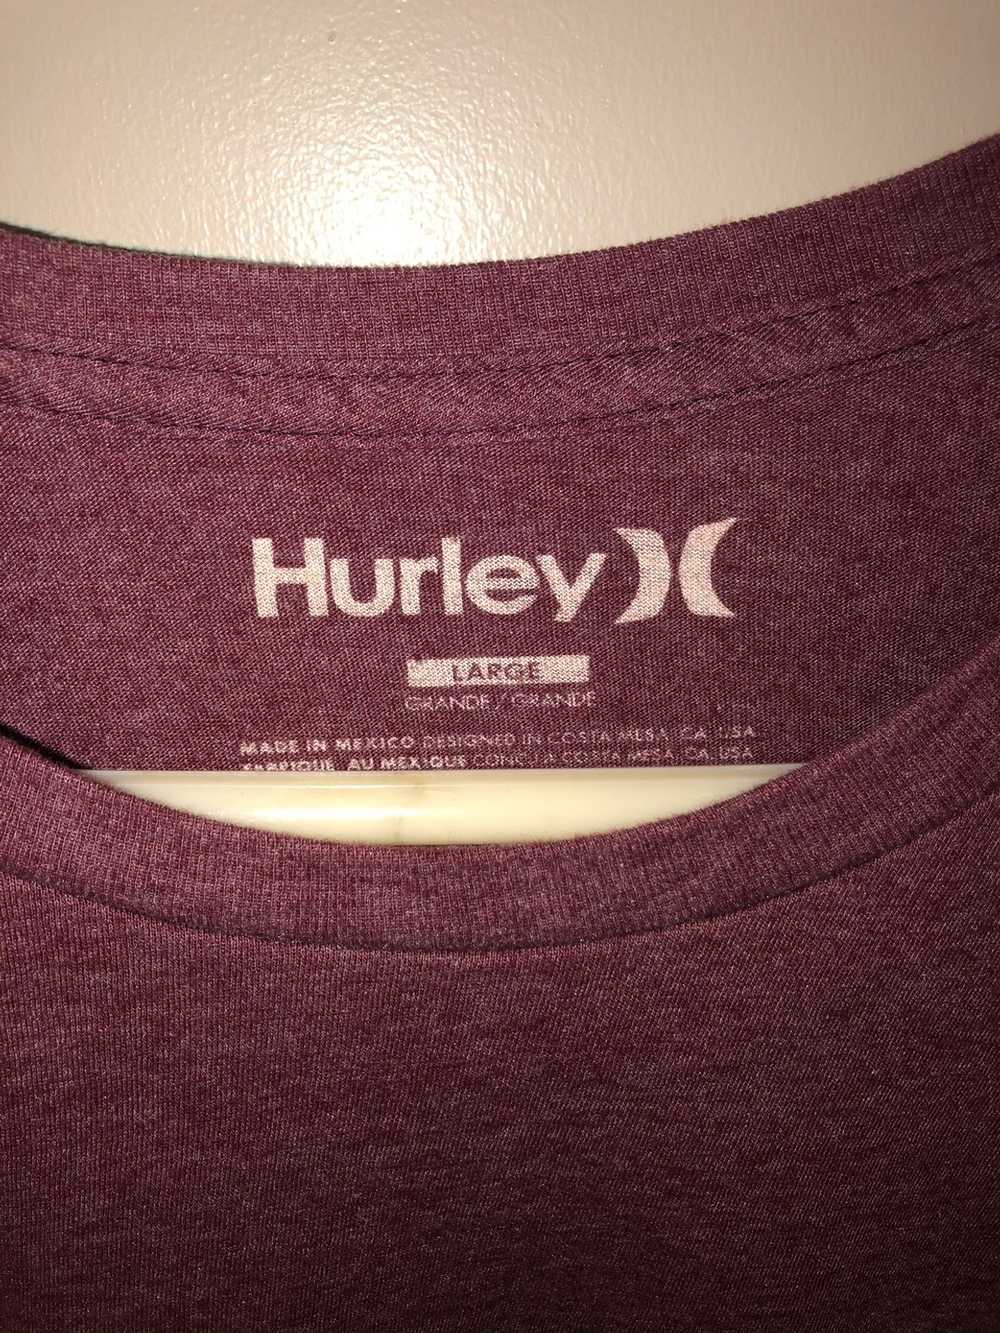 Hurley Men’s Hurley Long Sleeve Size Large - image 3